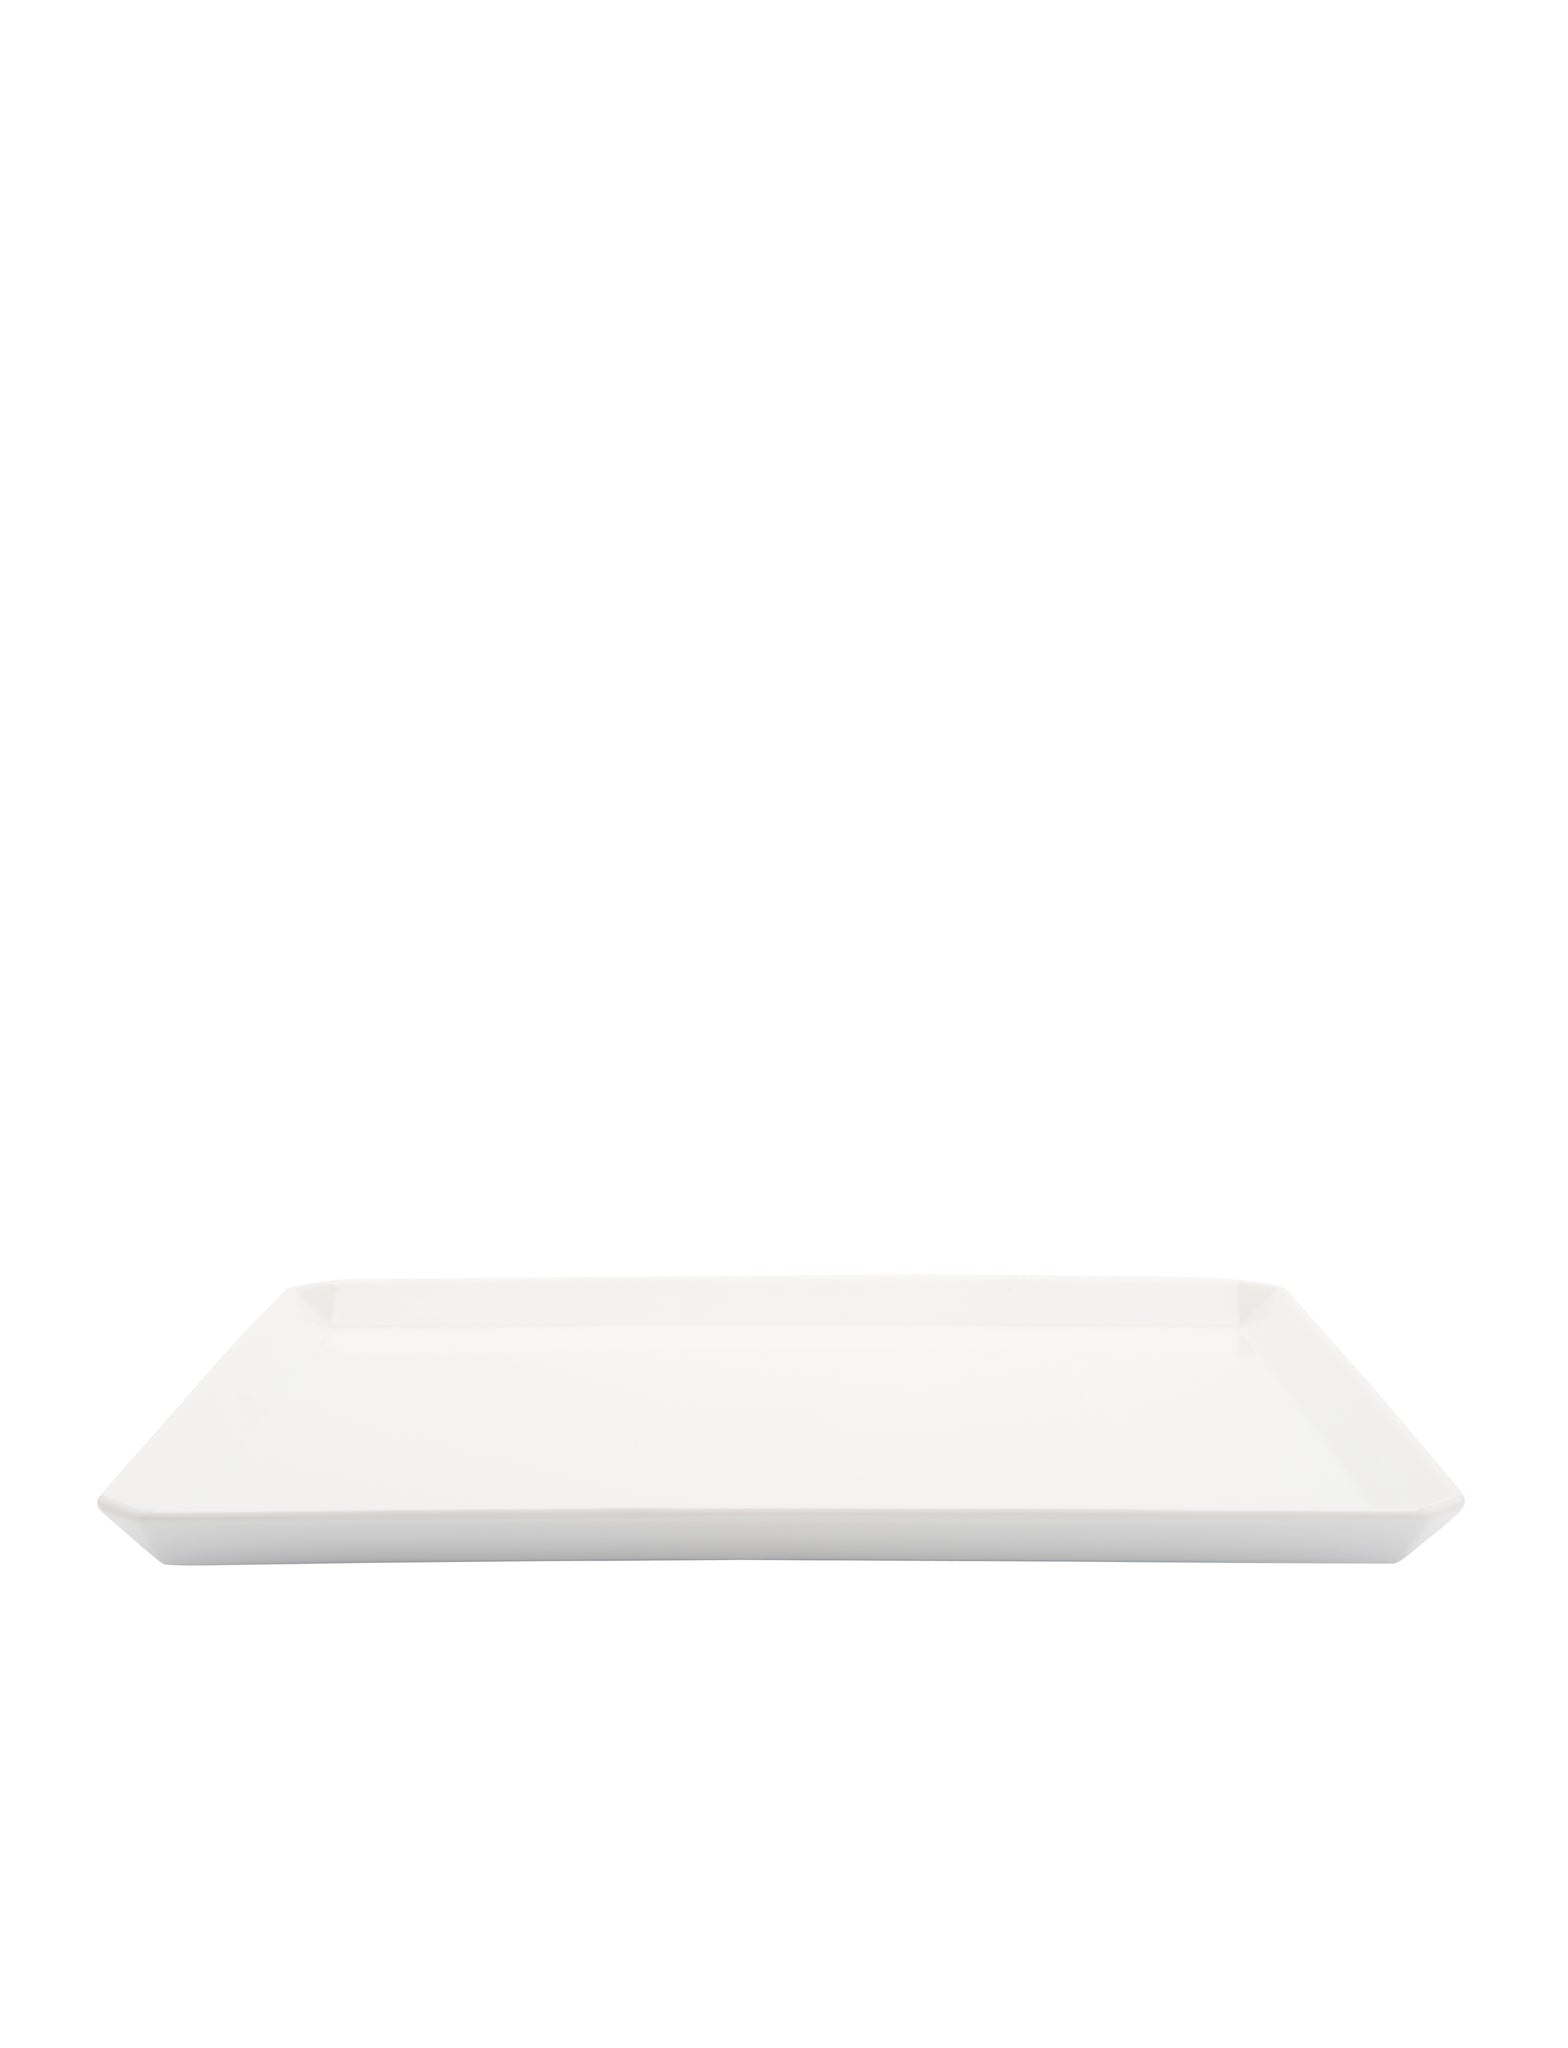 TY Square Plate 270 glazed white